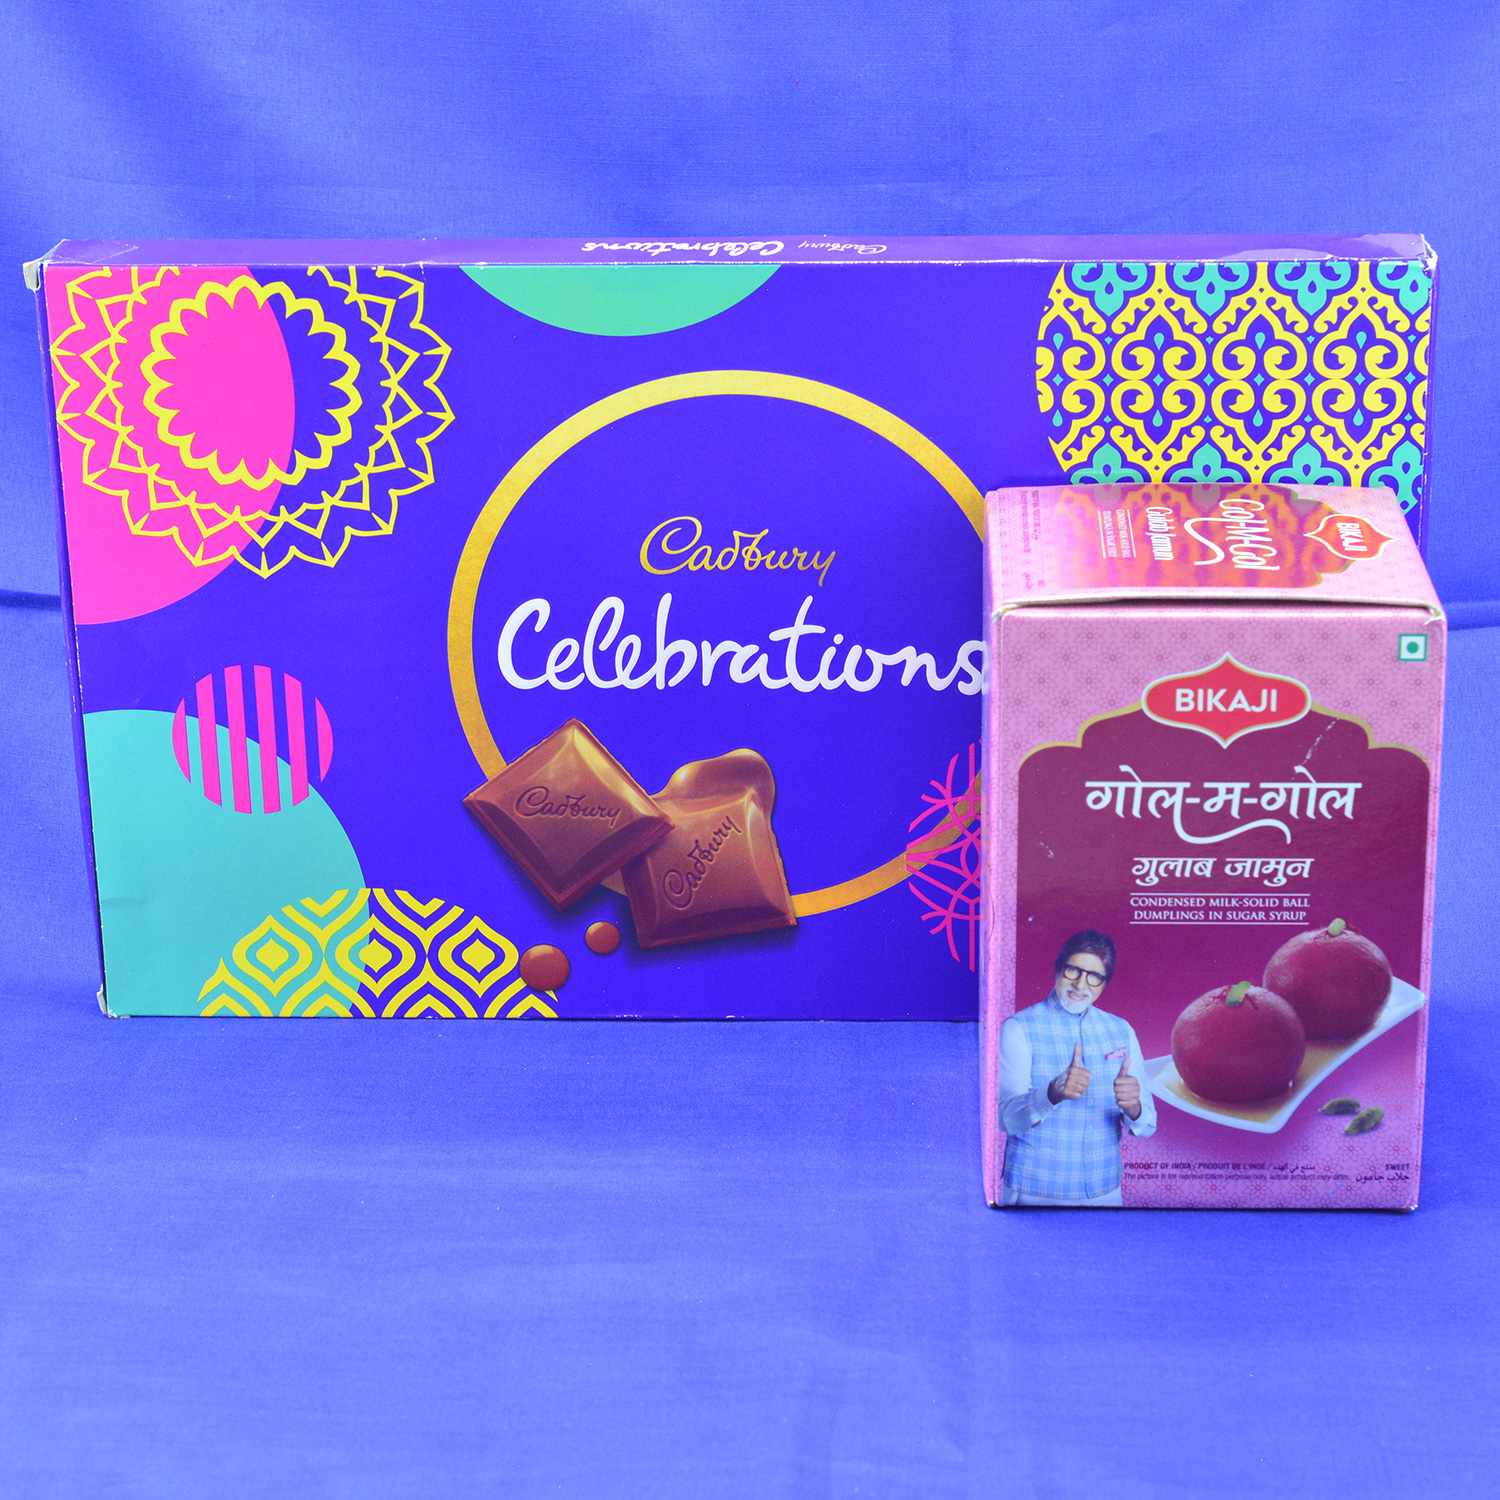 Mouthwatering Bikaji Gol Matol Gulab Jamun with flavorful Cadbury Celebrations